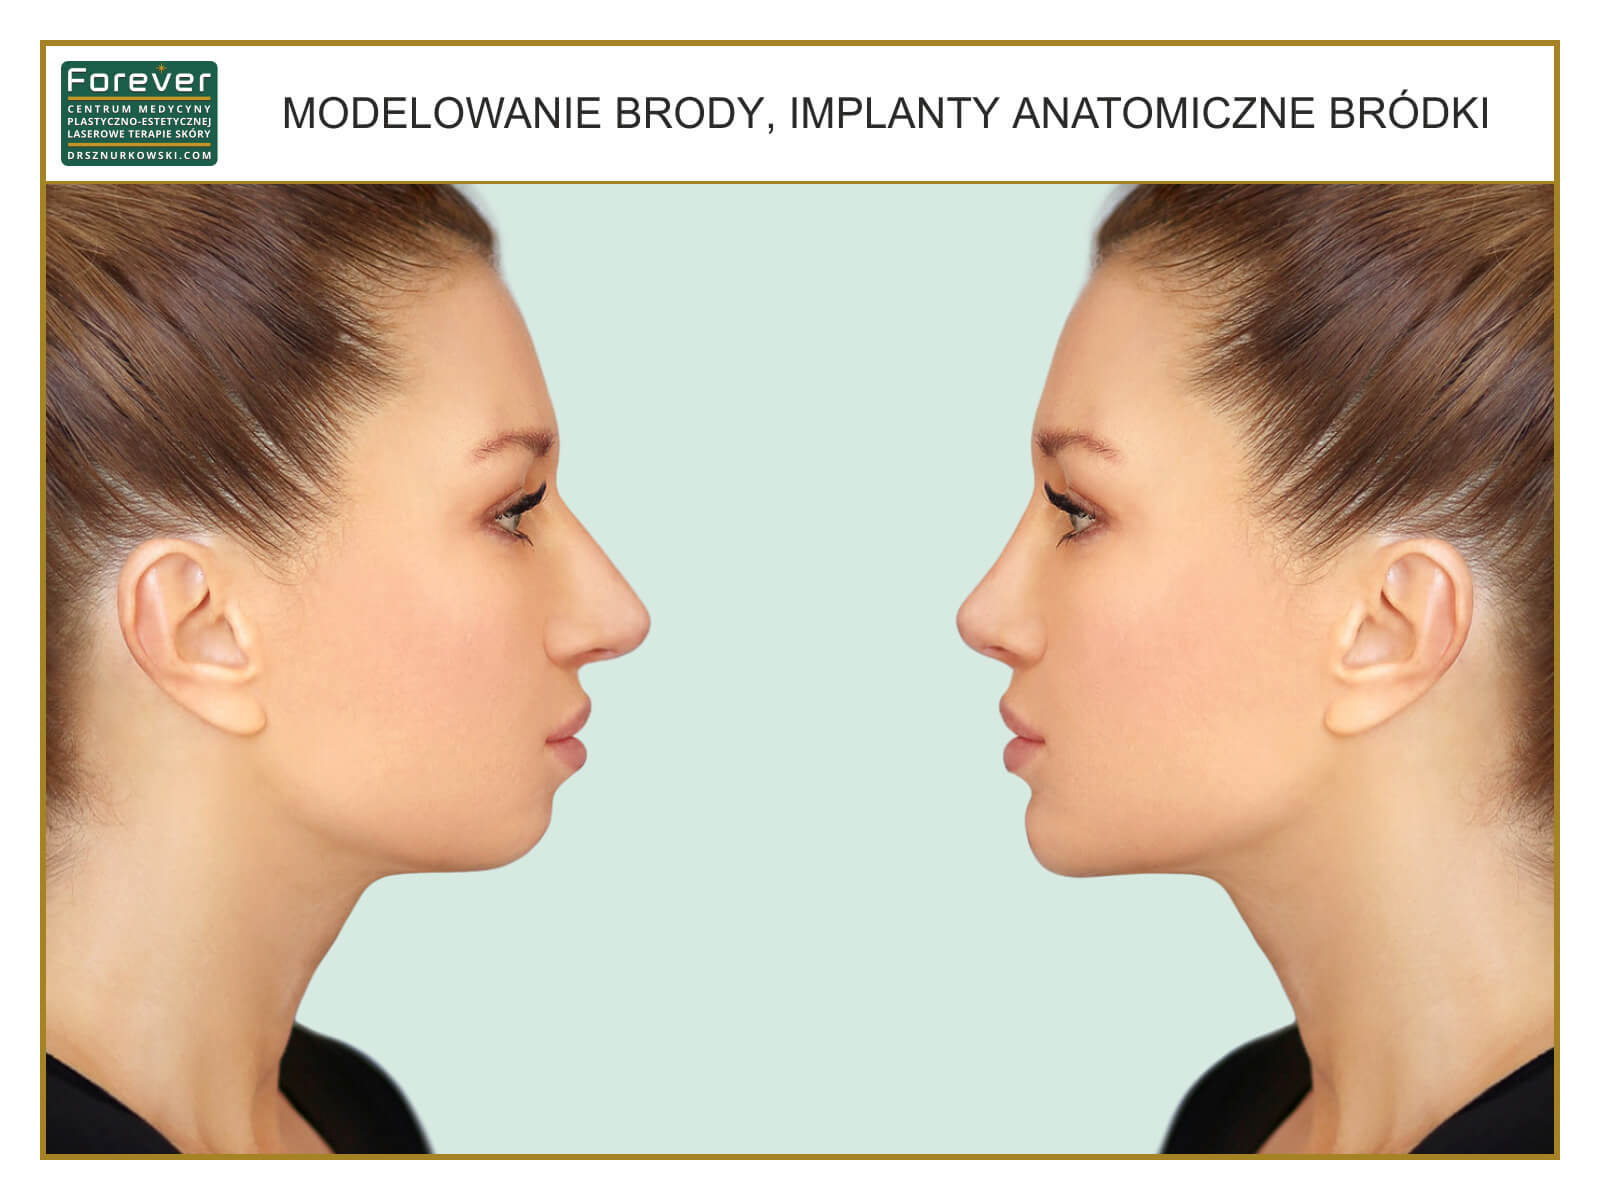 Facial Slimming, Anatomical Implants, Chin Augmentation (80x60) PL.jpg